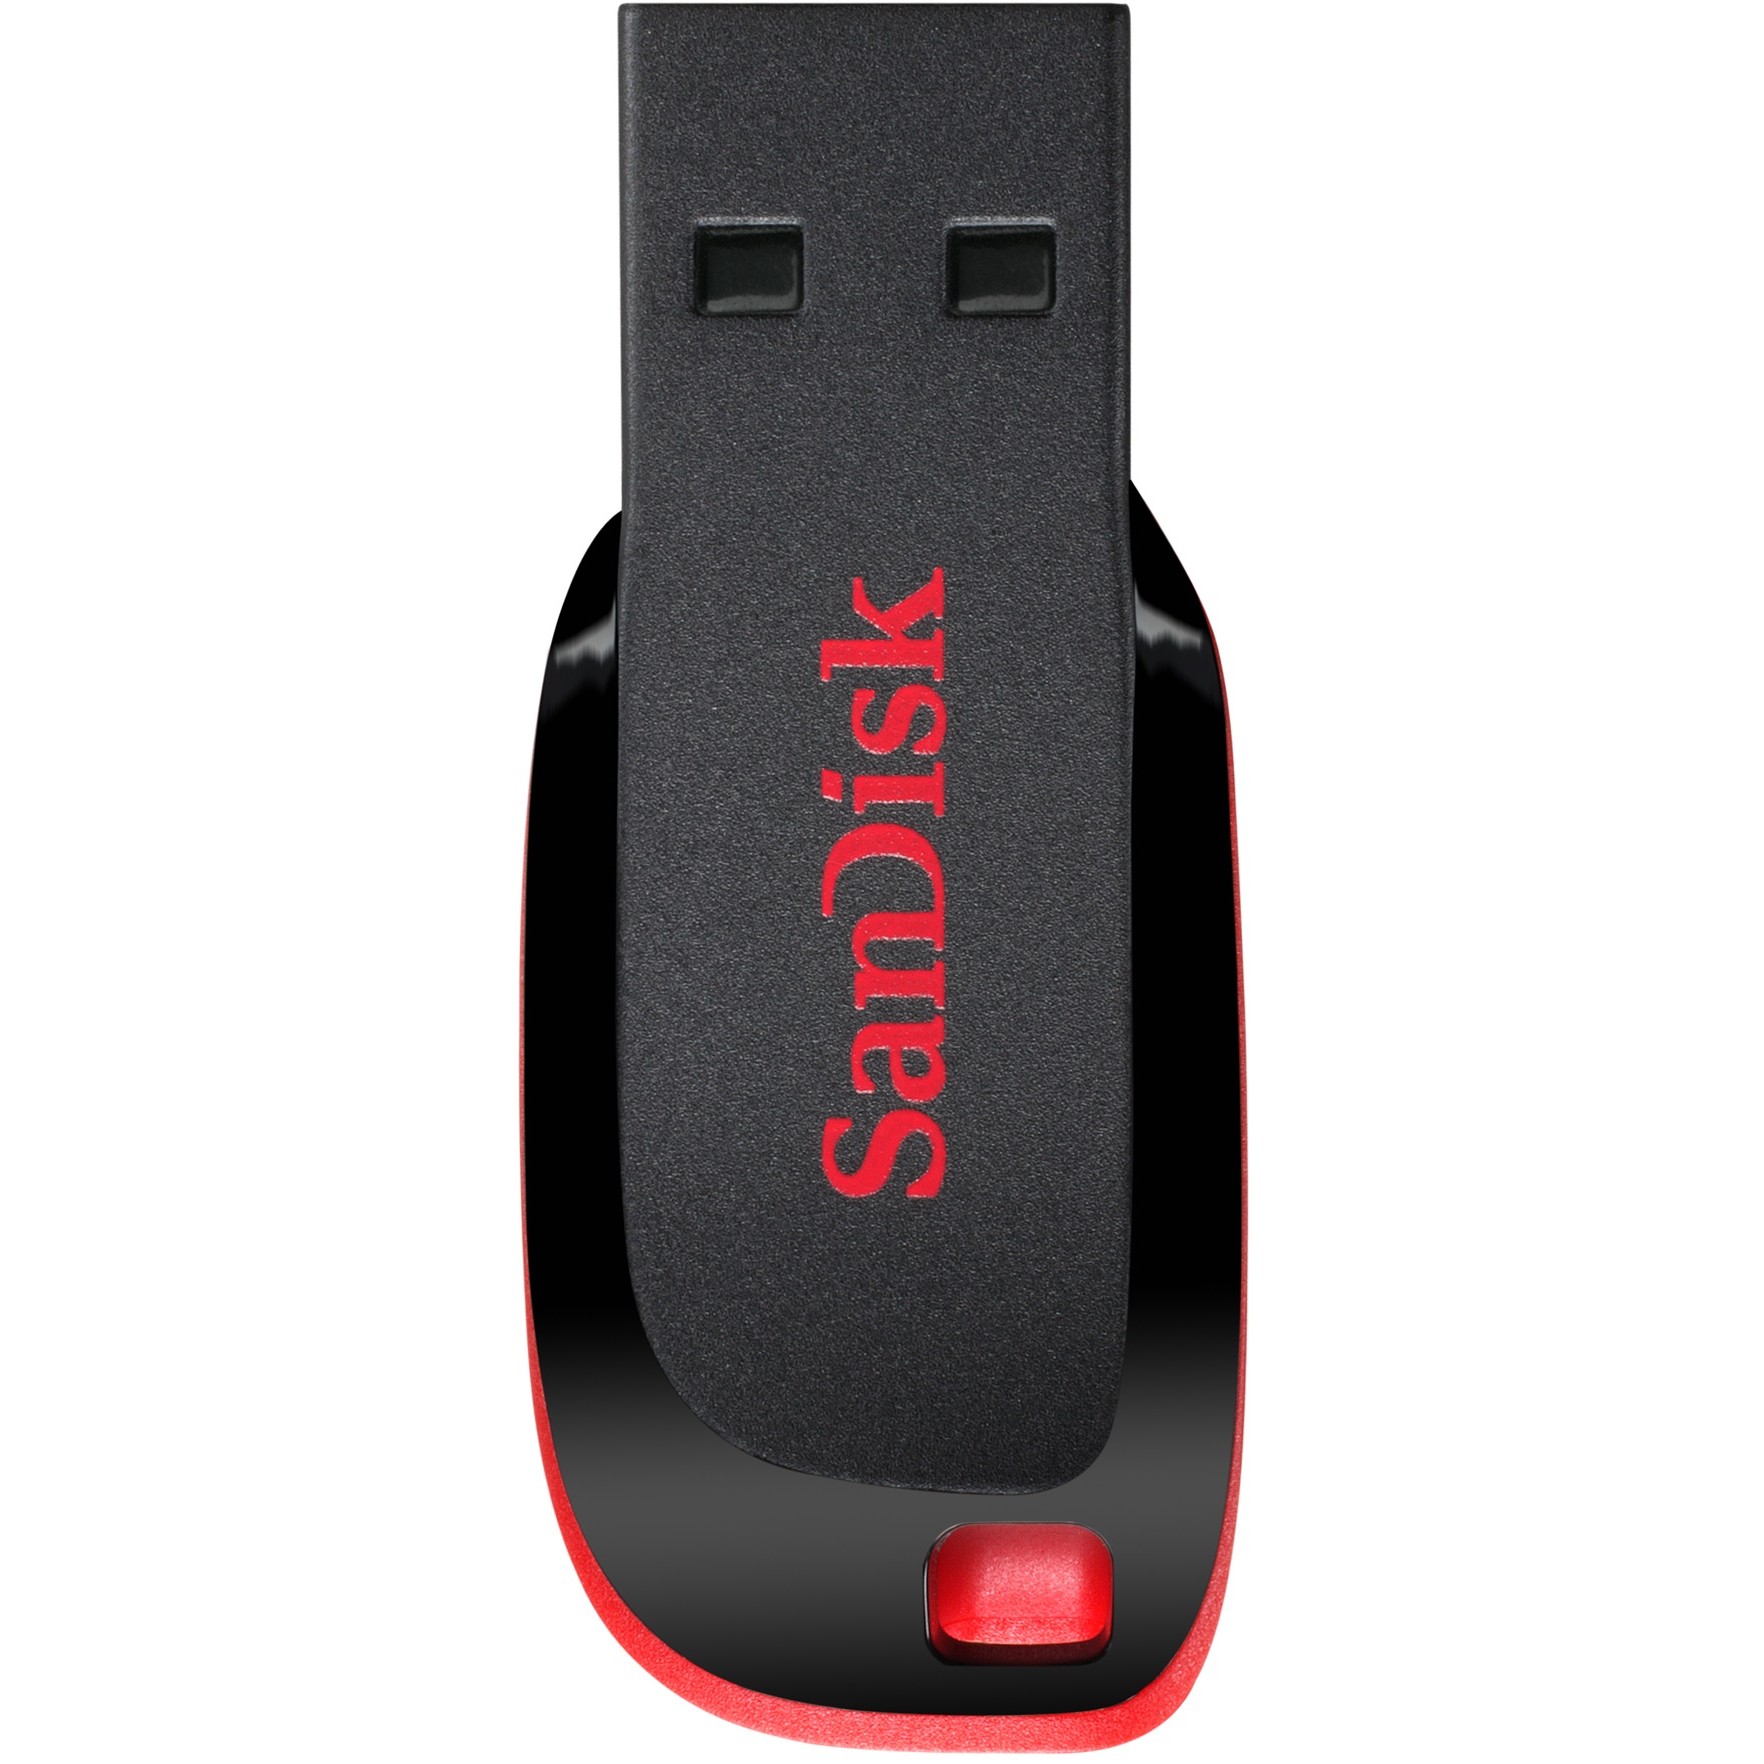 STICK 16GB USB 2.0 SanDisk Cruzer Blade Black/Red